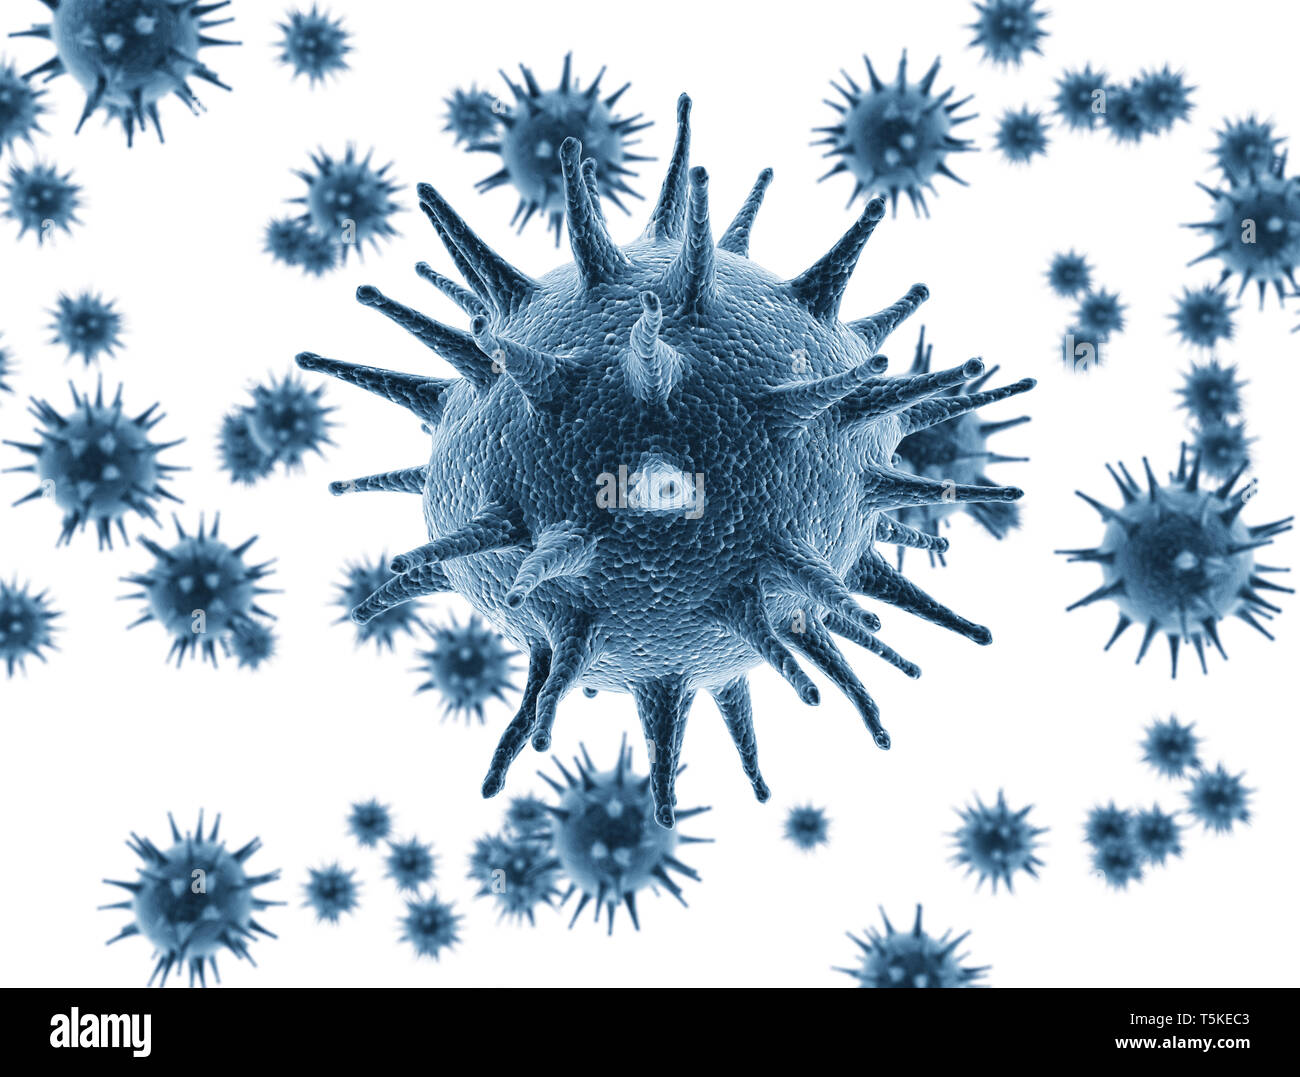 3d illustration viral infection. Hepatitis viruses, influenza virus H1N1. Virus abstract background. - 3D Illustration isolated on white background. Stock Photo